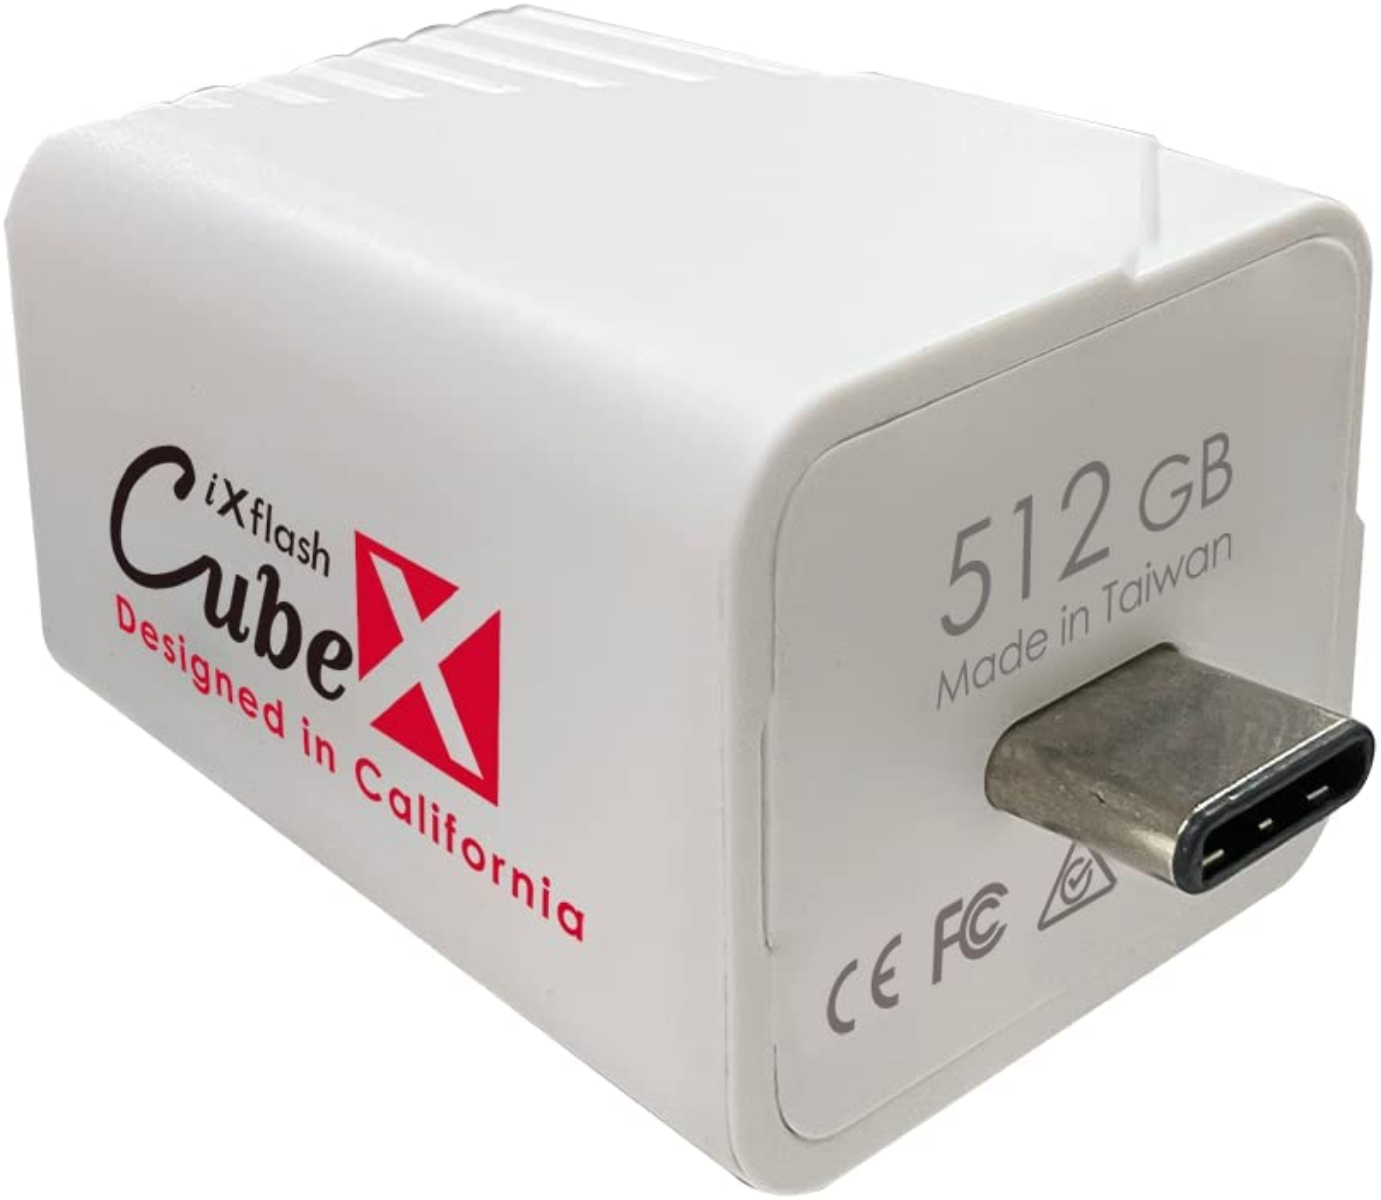 PIODATA iXflash Cube USB-C GB) 512 (Weiß